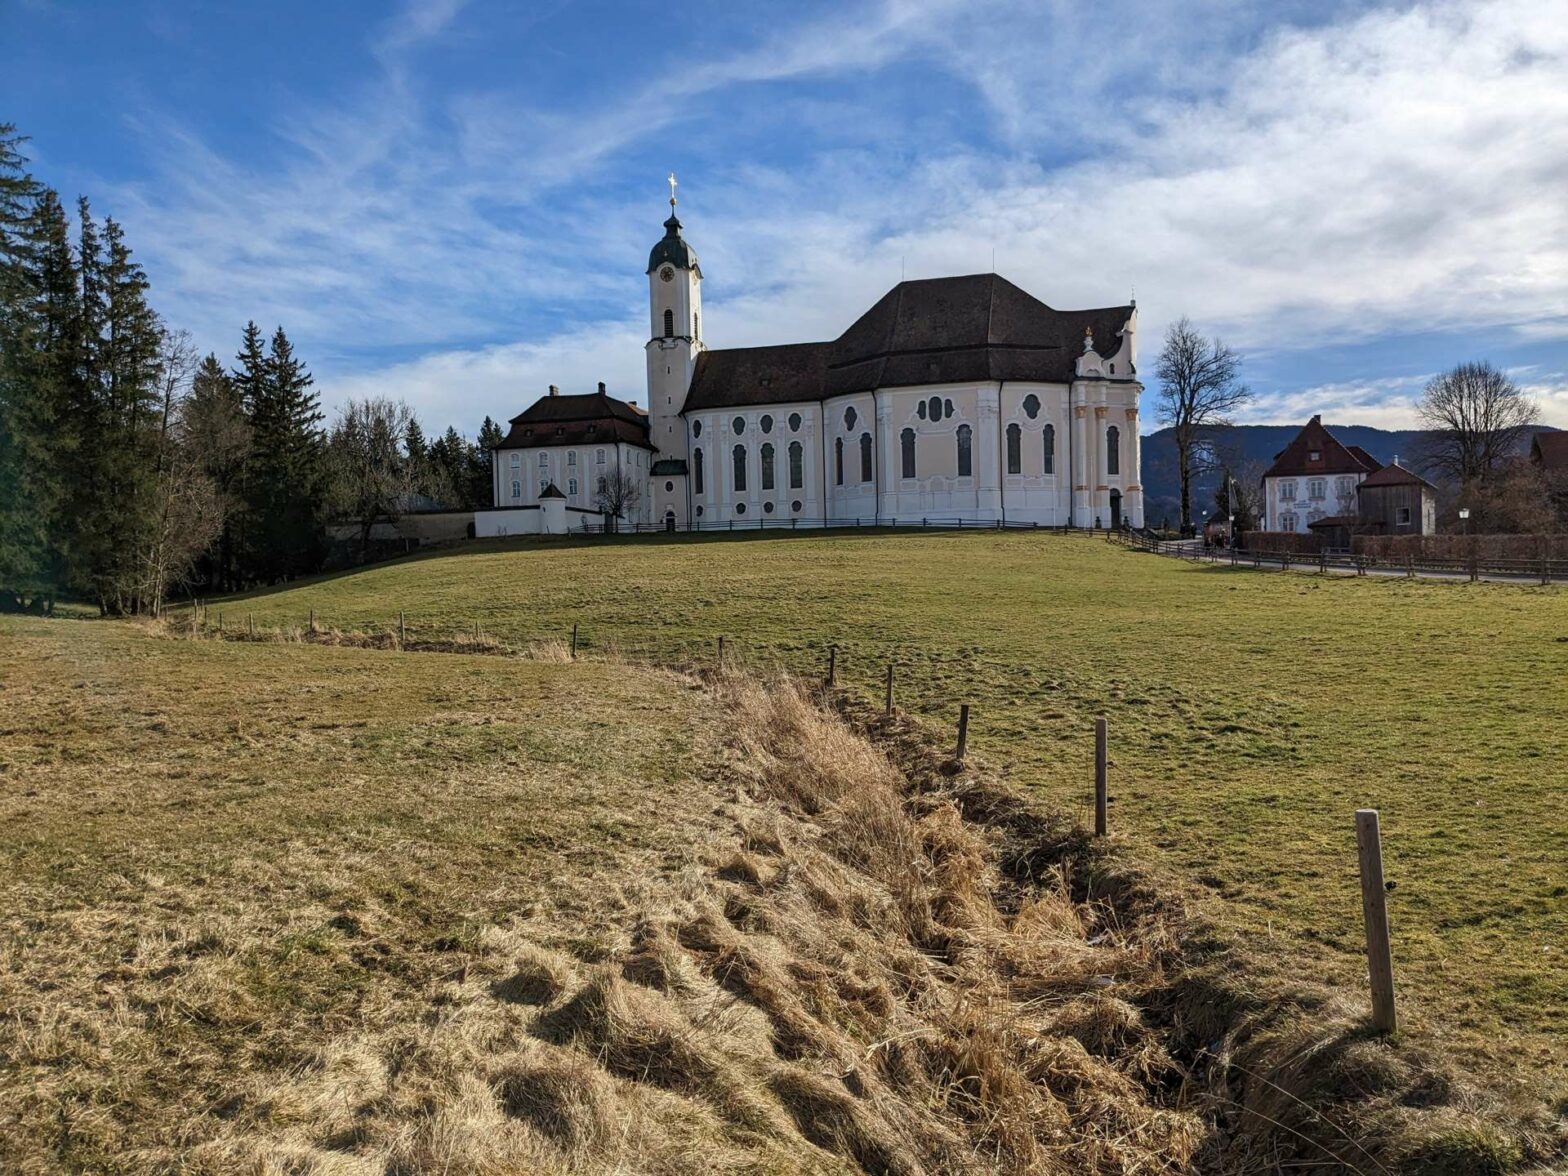 Wieskirche, on the Romantic Road